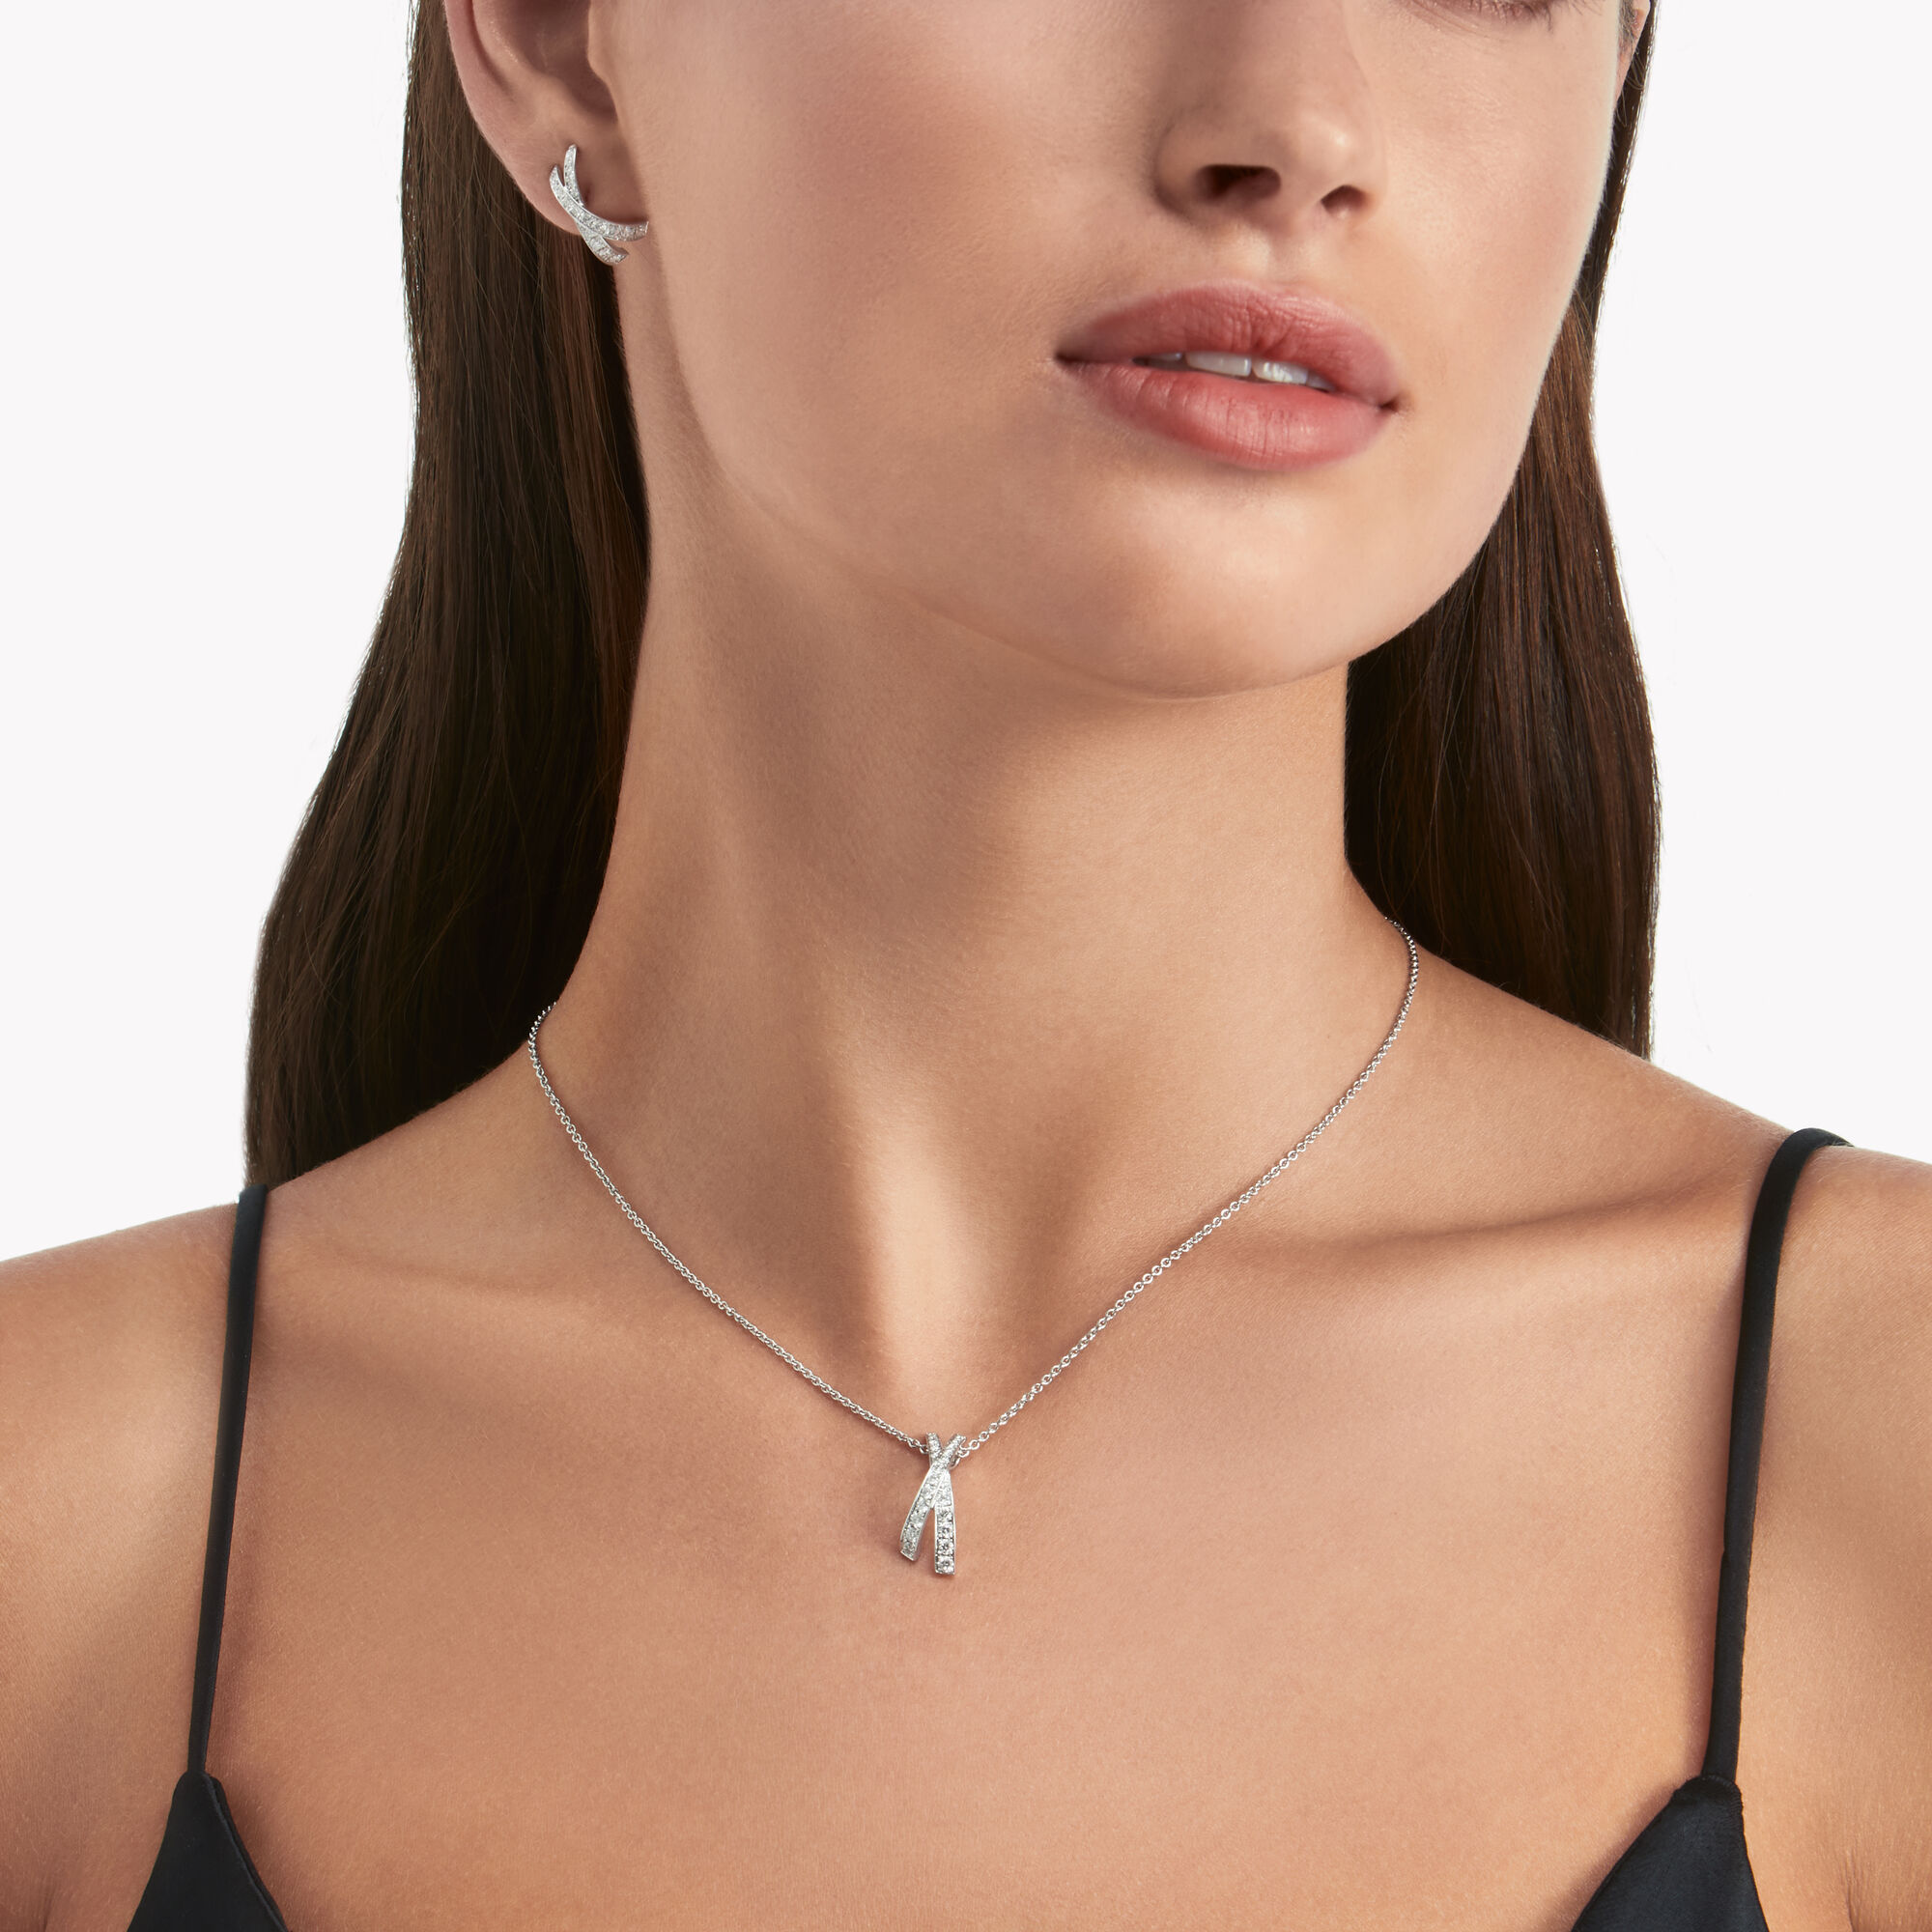 Model wears Kiss Pavé Diamond Stud Earrings and Kiss Pavé Diamond Pendant from the Graff jewellery collection